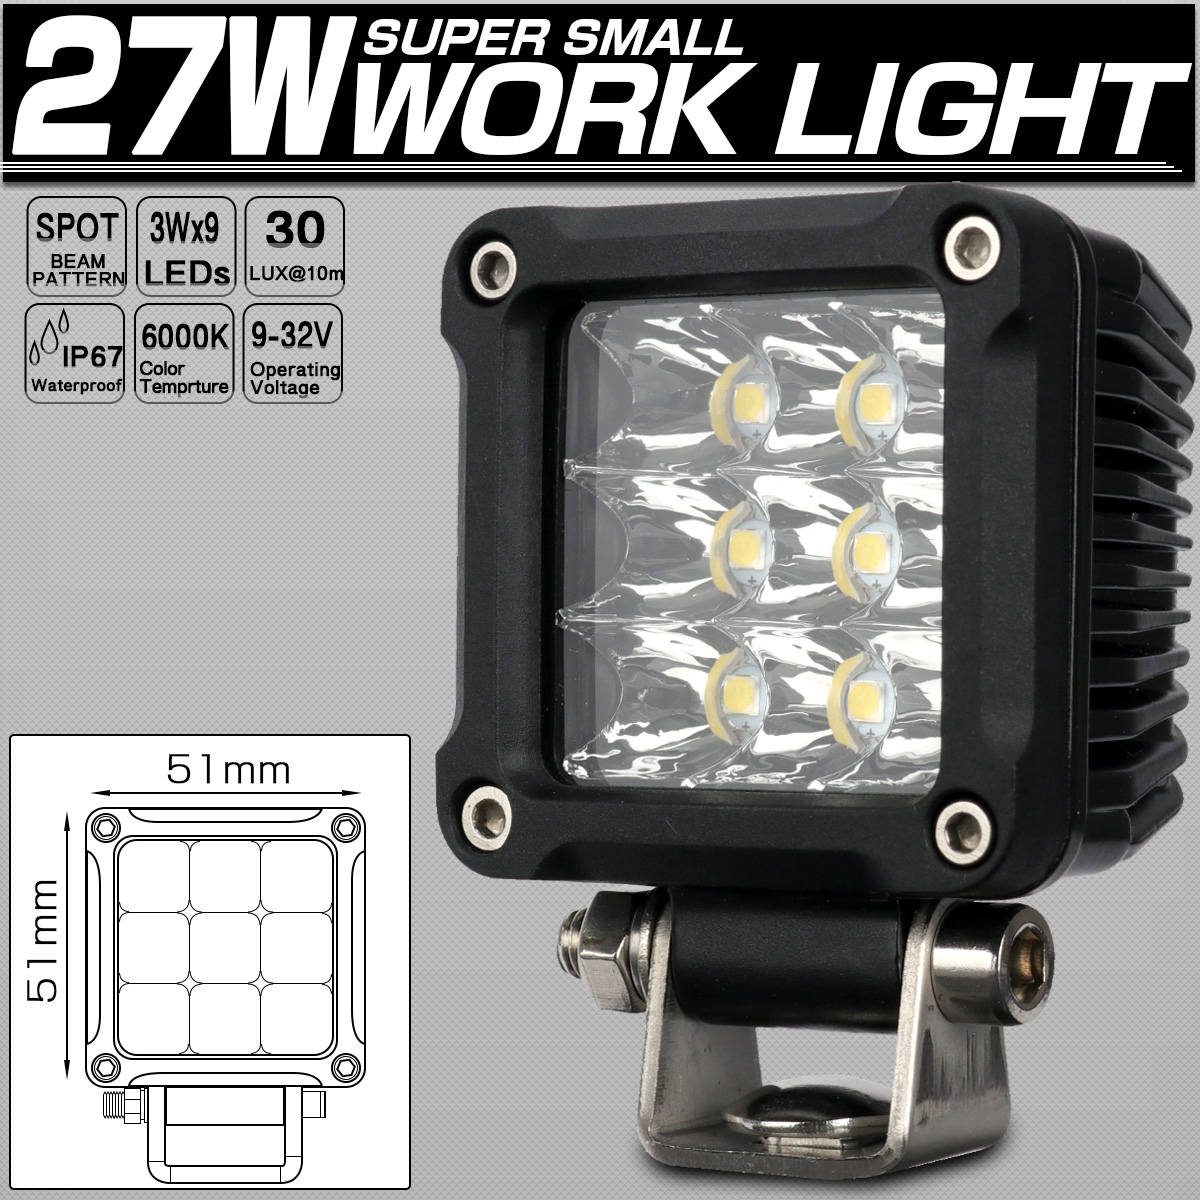 LED 作業灯 27W 超小型 軽量モデル ワークライト バックランプ フォグランプ 各種 補助灯に 12V 24V P-537